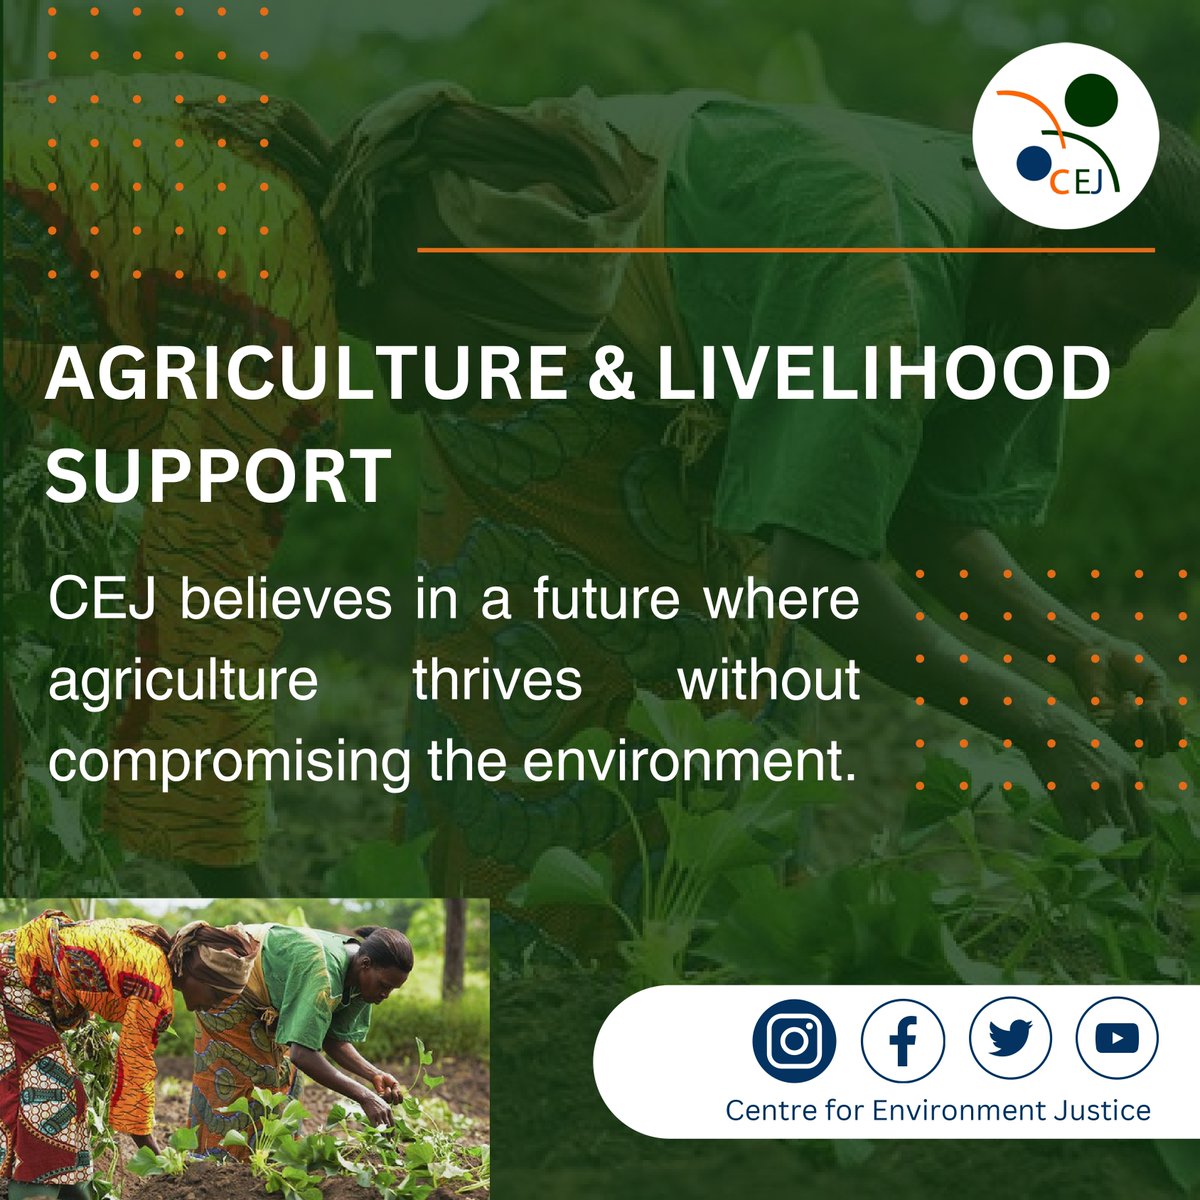 [ CEJ Agriculture and Livelihood Support ]
#Agriculture
#LivelihoodSupport